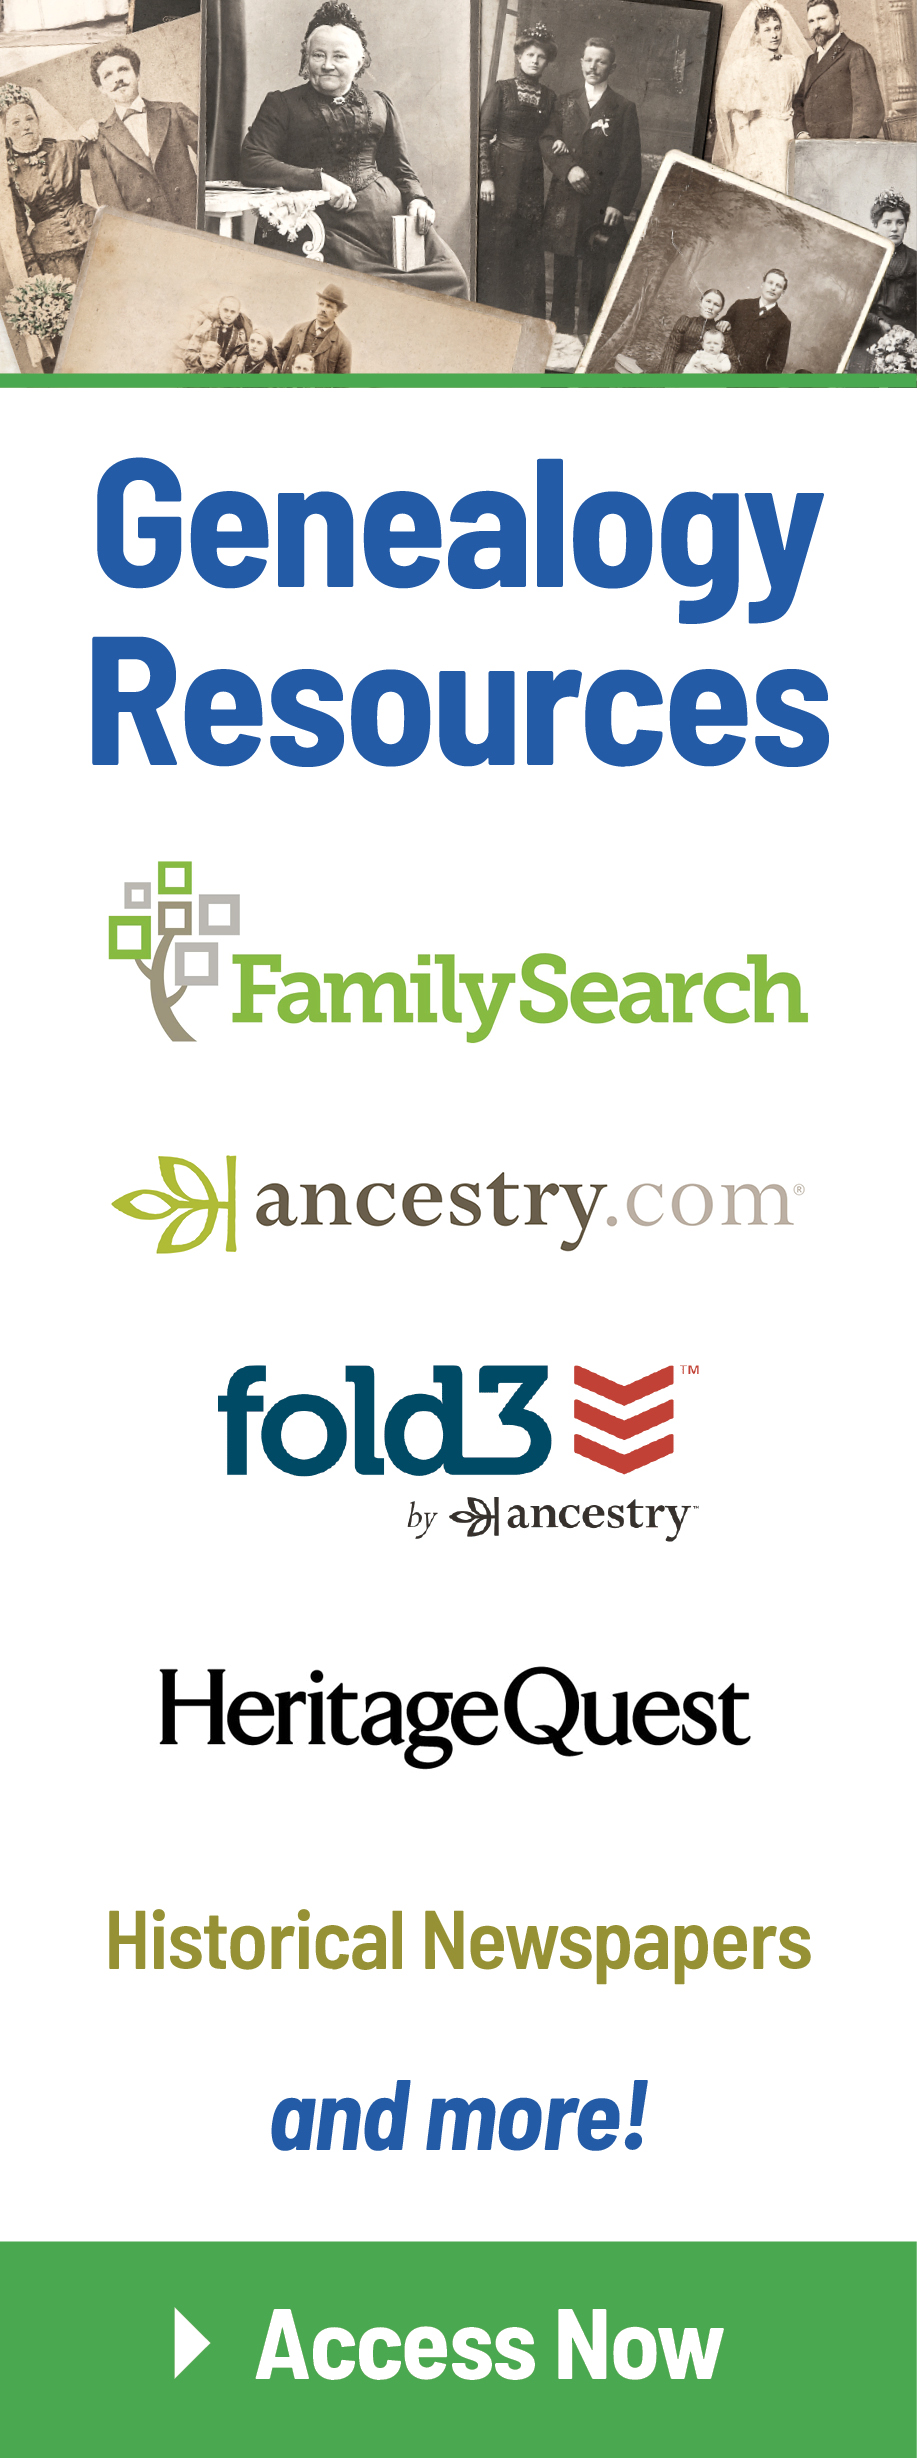 Genealogy Resources